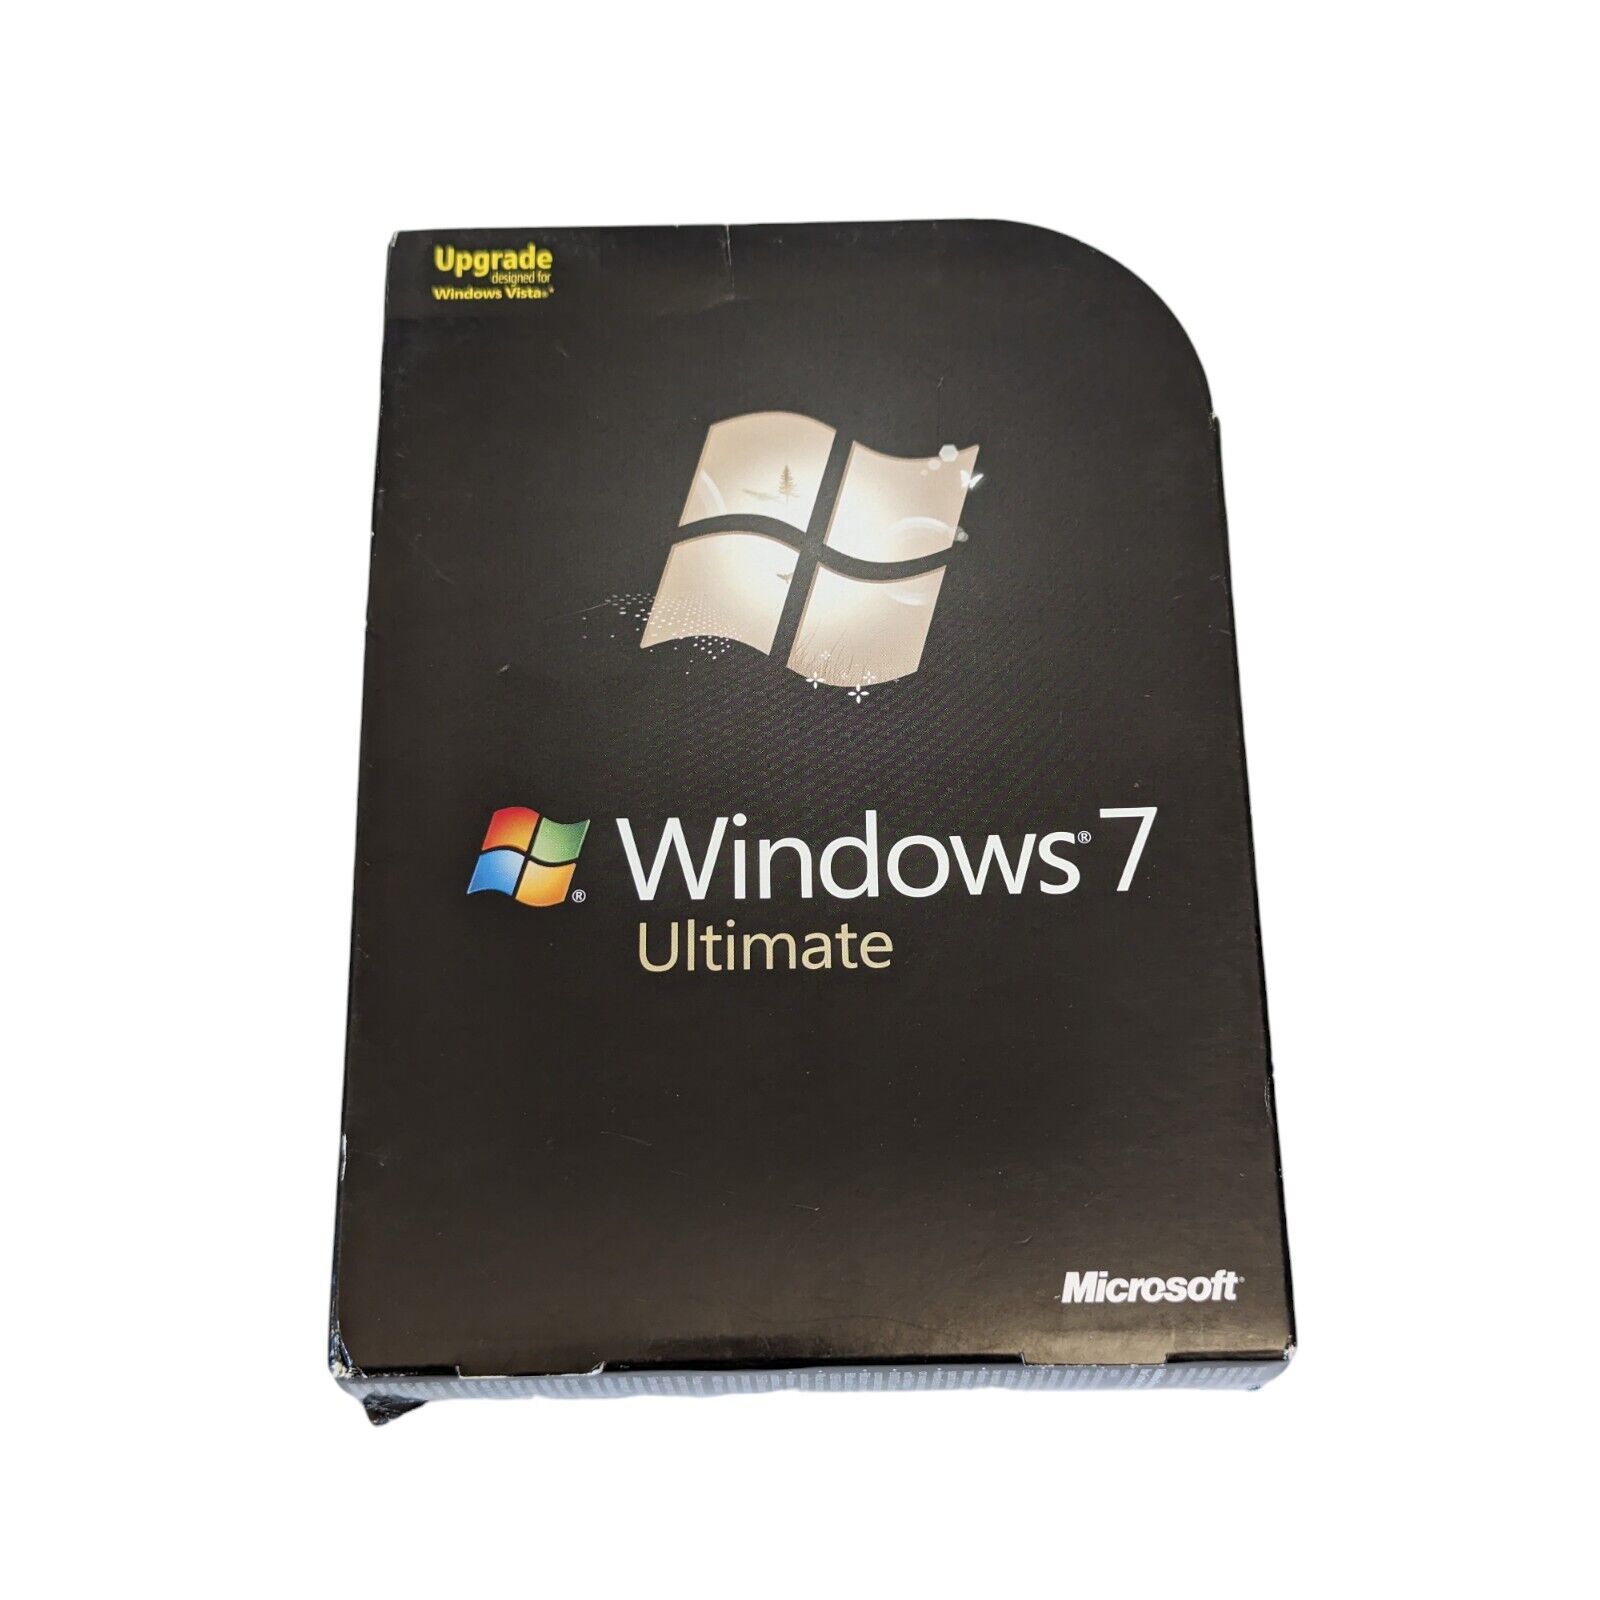 Microsoft Windows 7 Ultimate 32/64-Bit - Full Version for Windows w product key